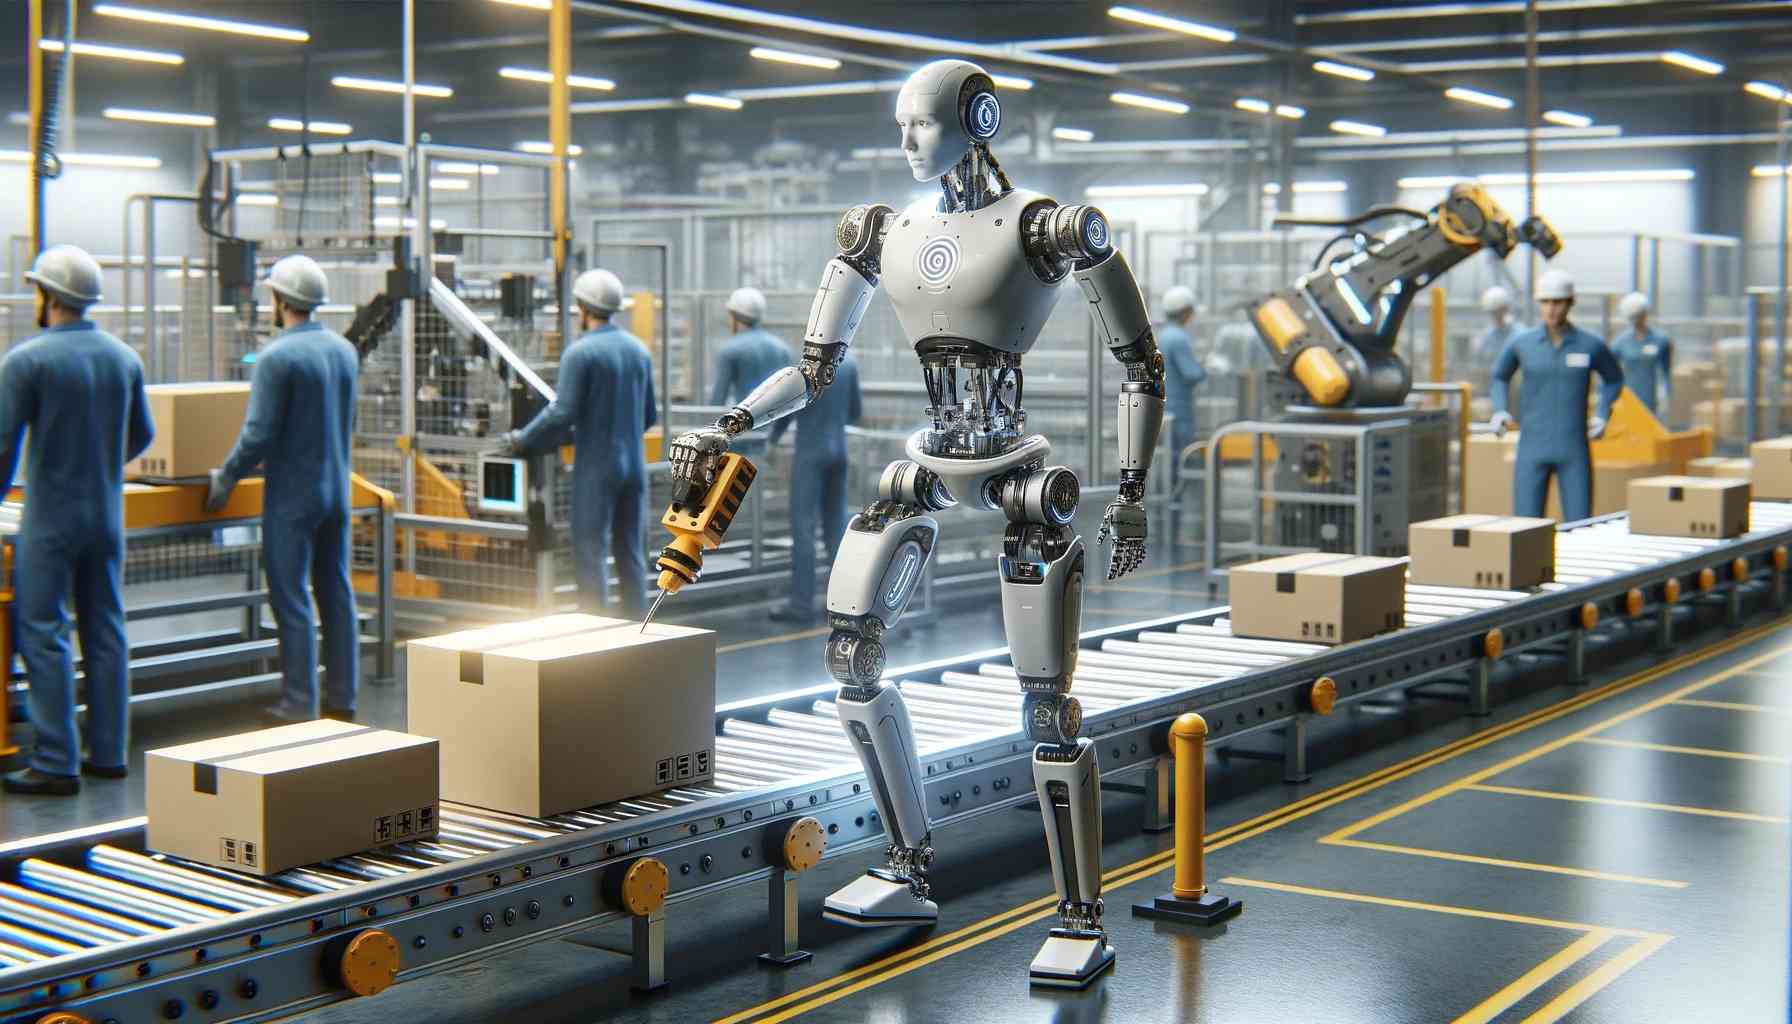 Humanoid robots inside warehouse with conveyor belt.